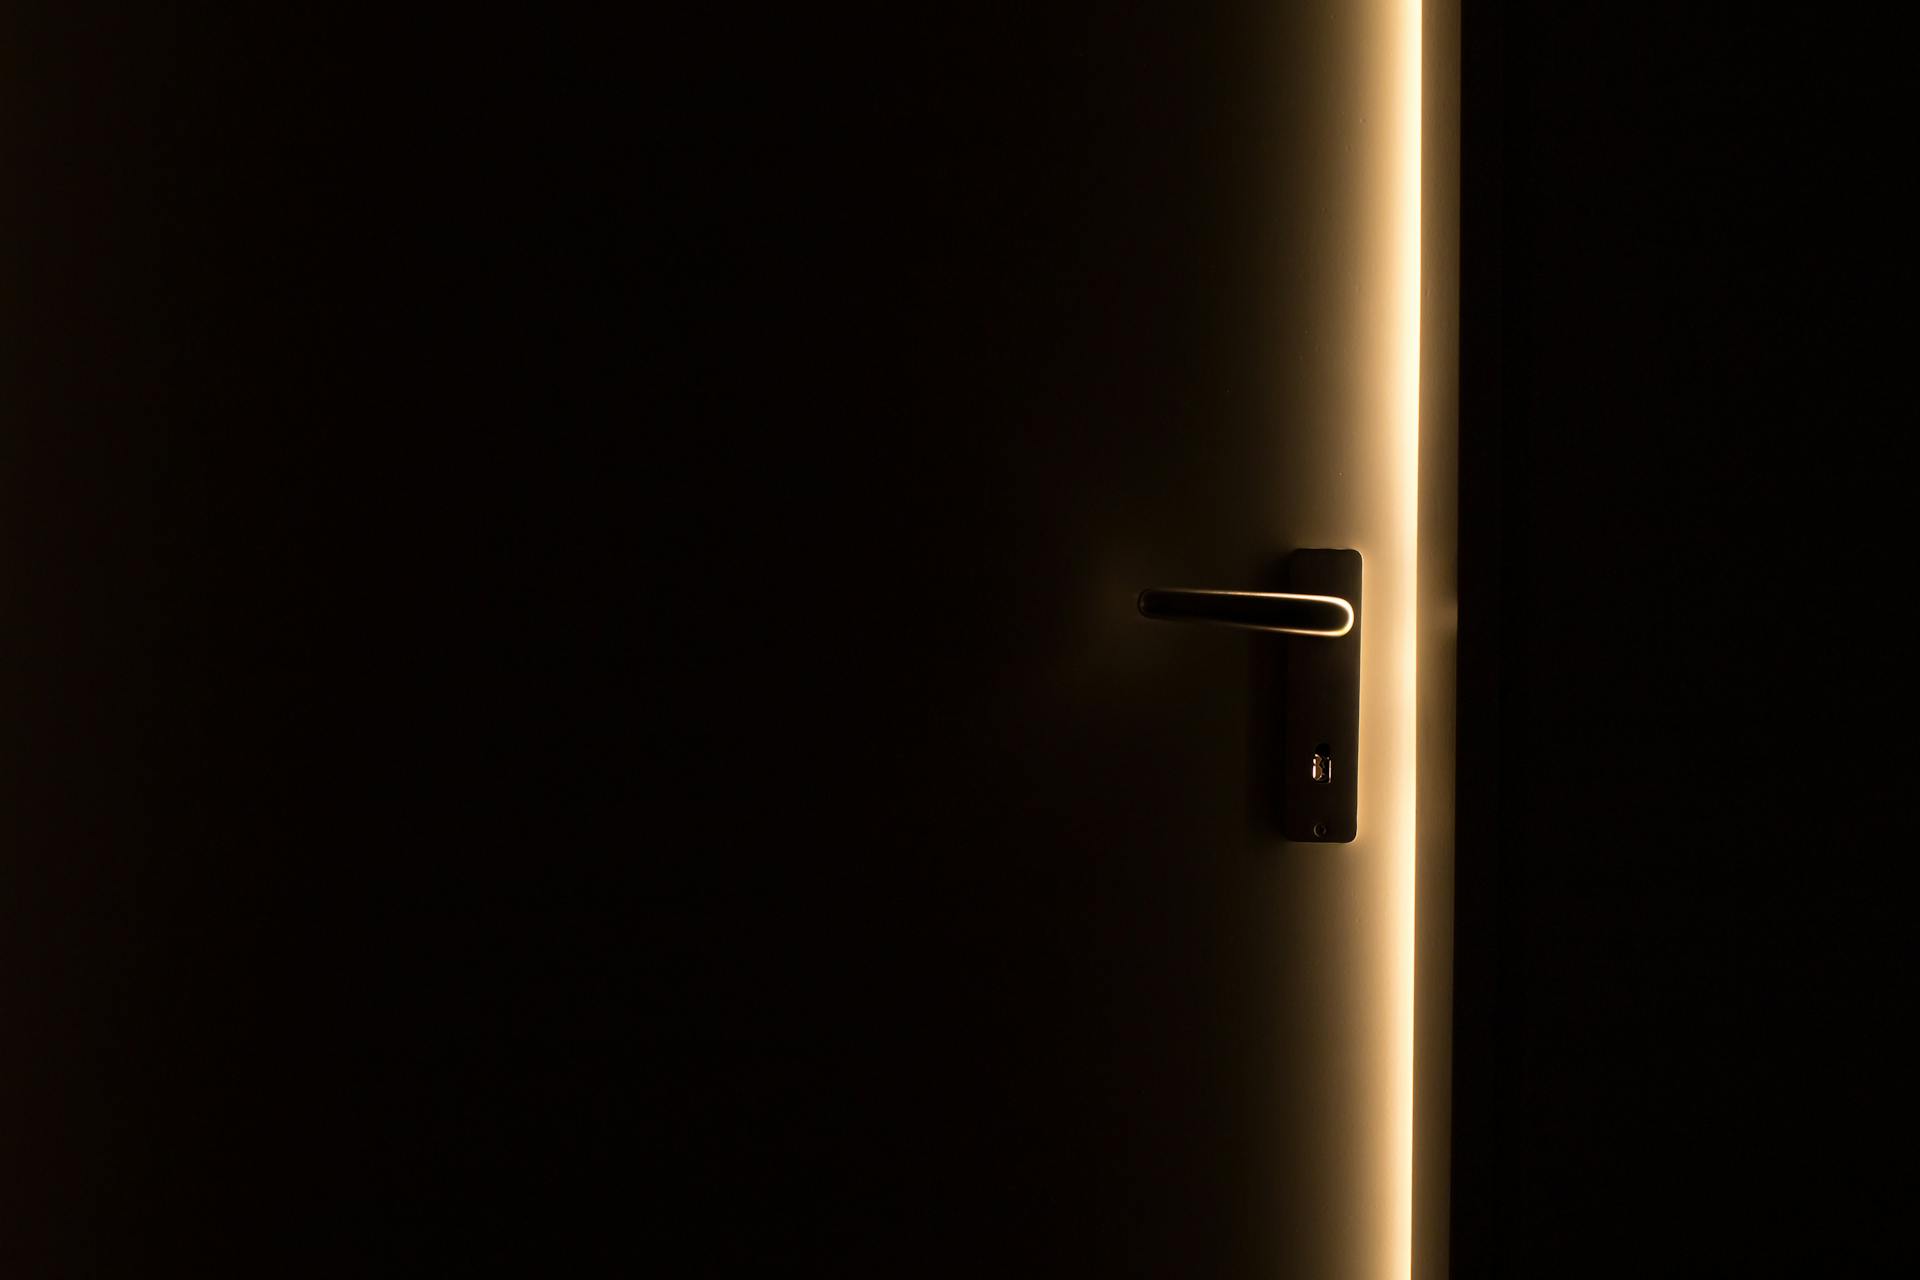 A door slightly open with light streaming in | Source: Pexels